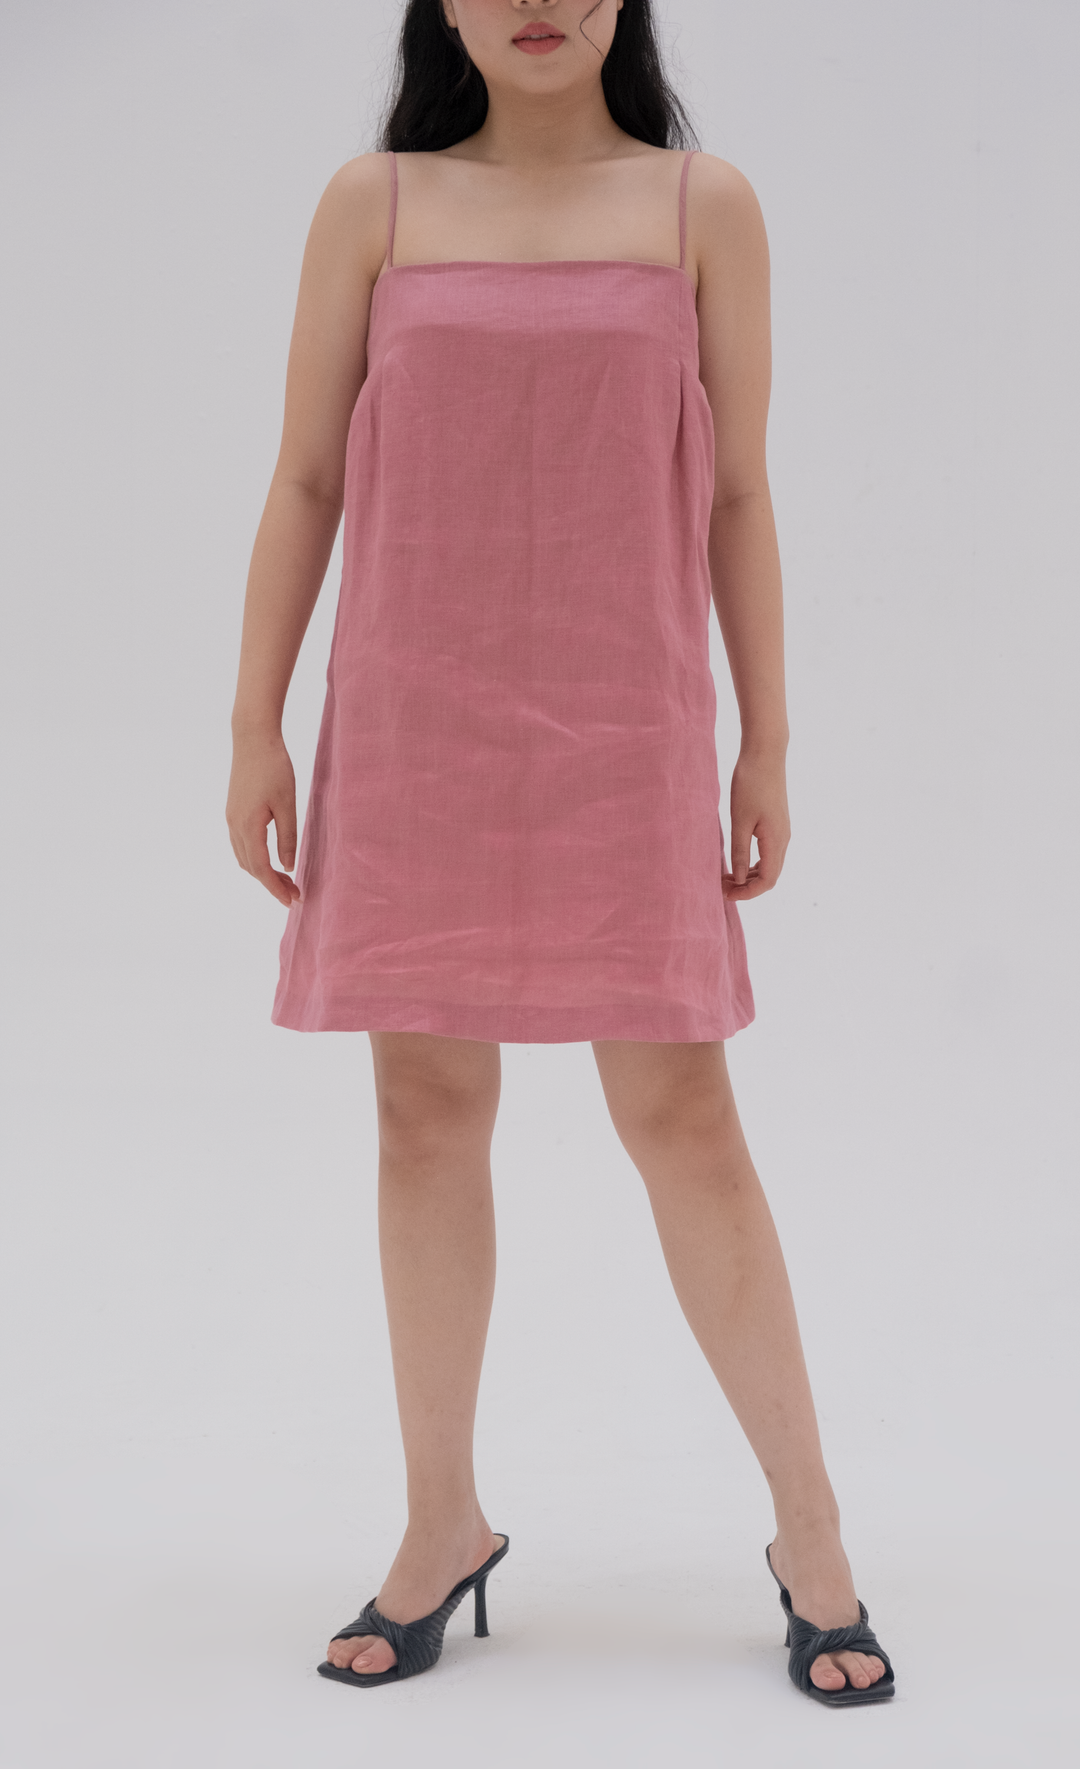 Ariana 100% Linen Babydoll Mini Dress